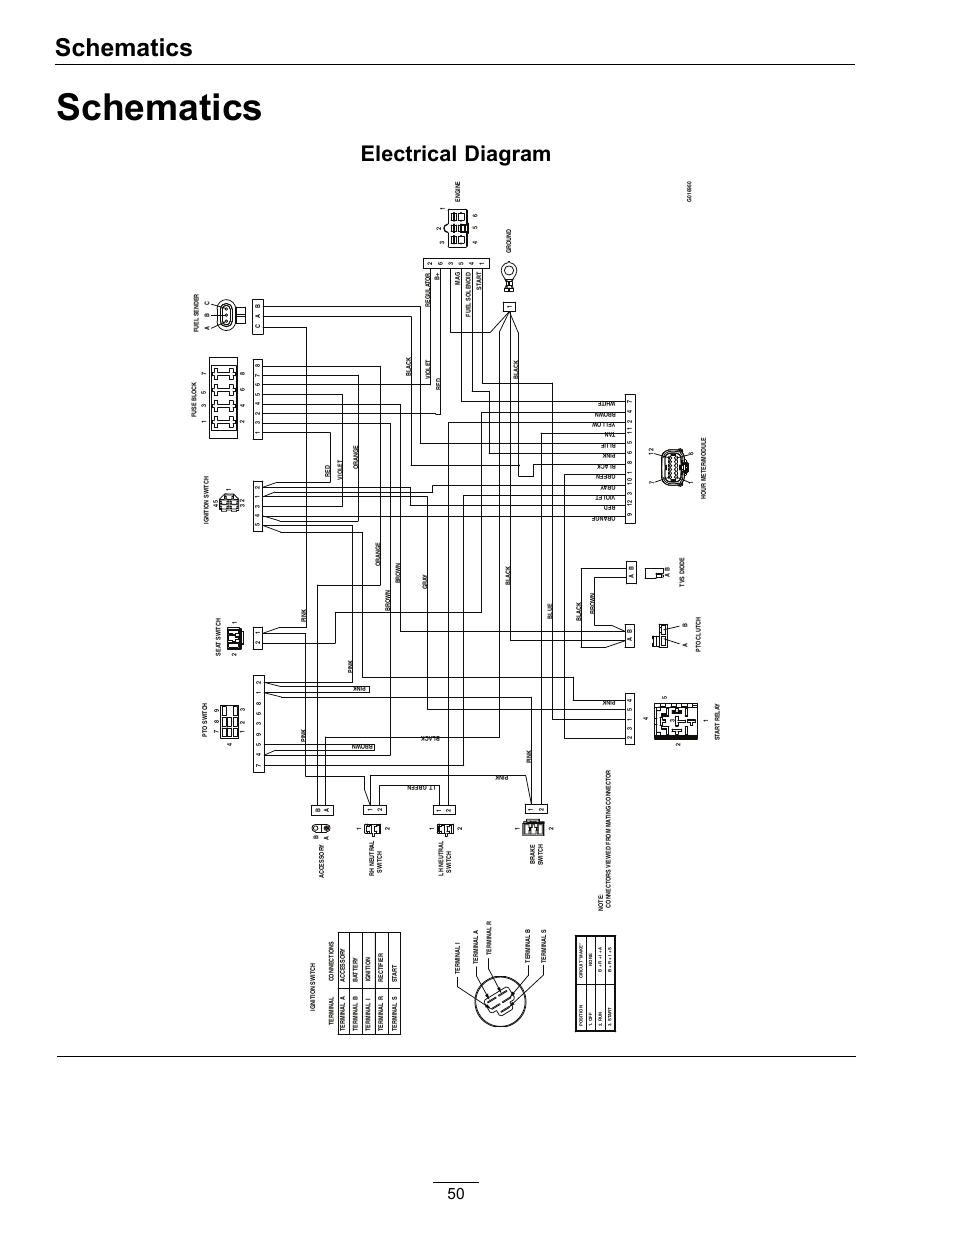 hsh wiring diagram 5 way switch